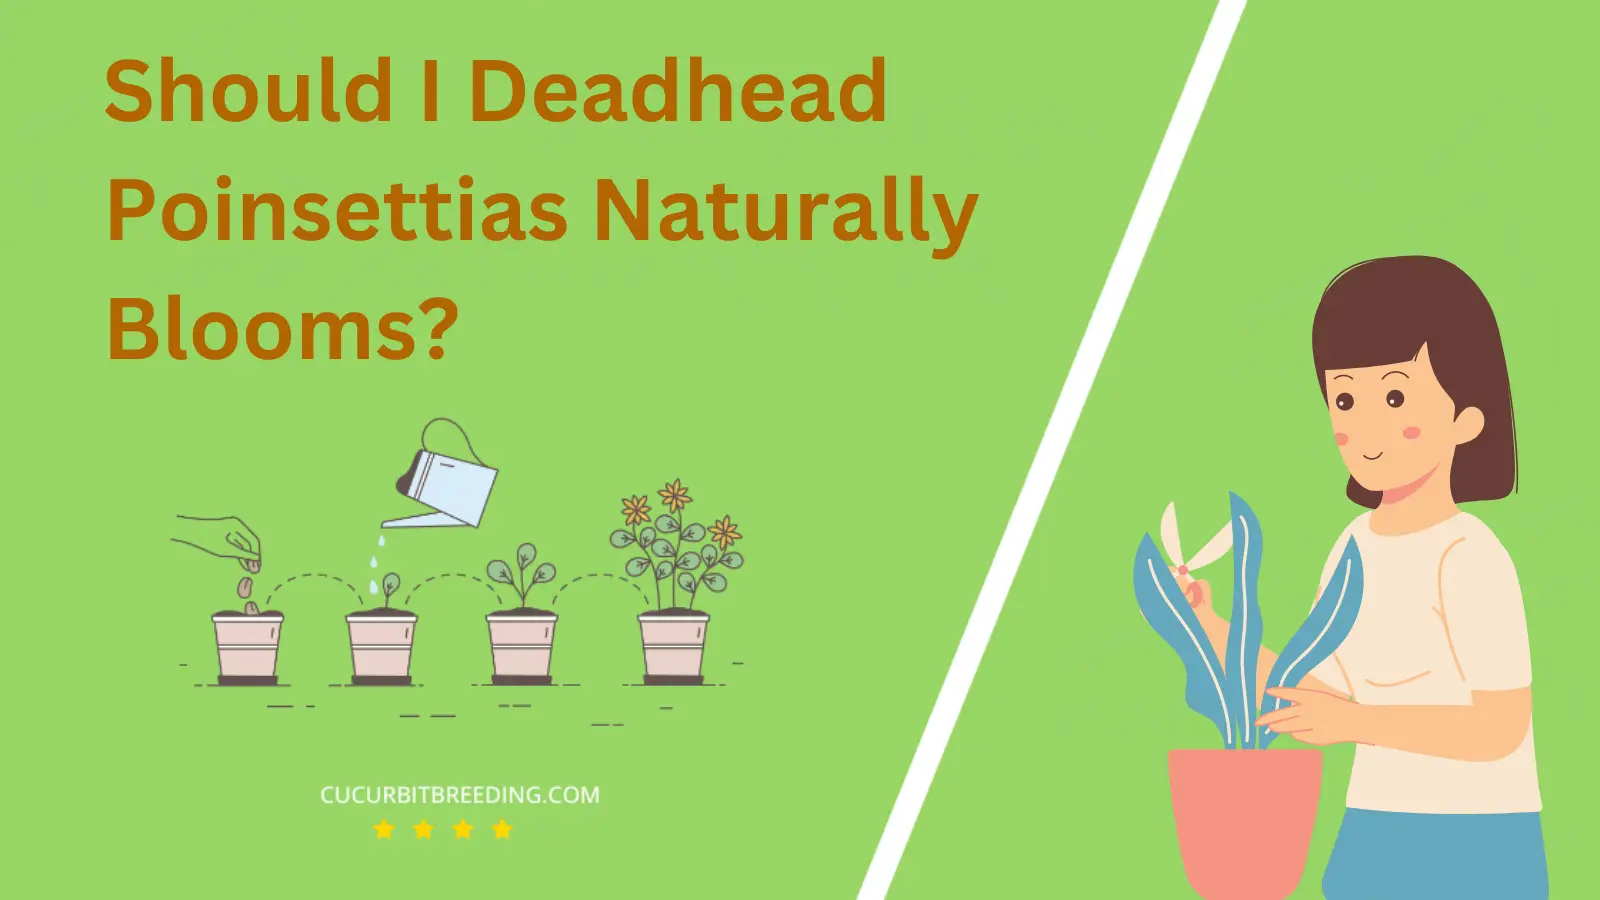 Should I Deadhead Poinsettias Naturally Blooms?